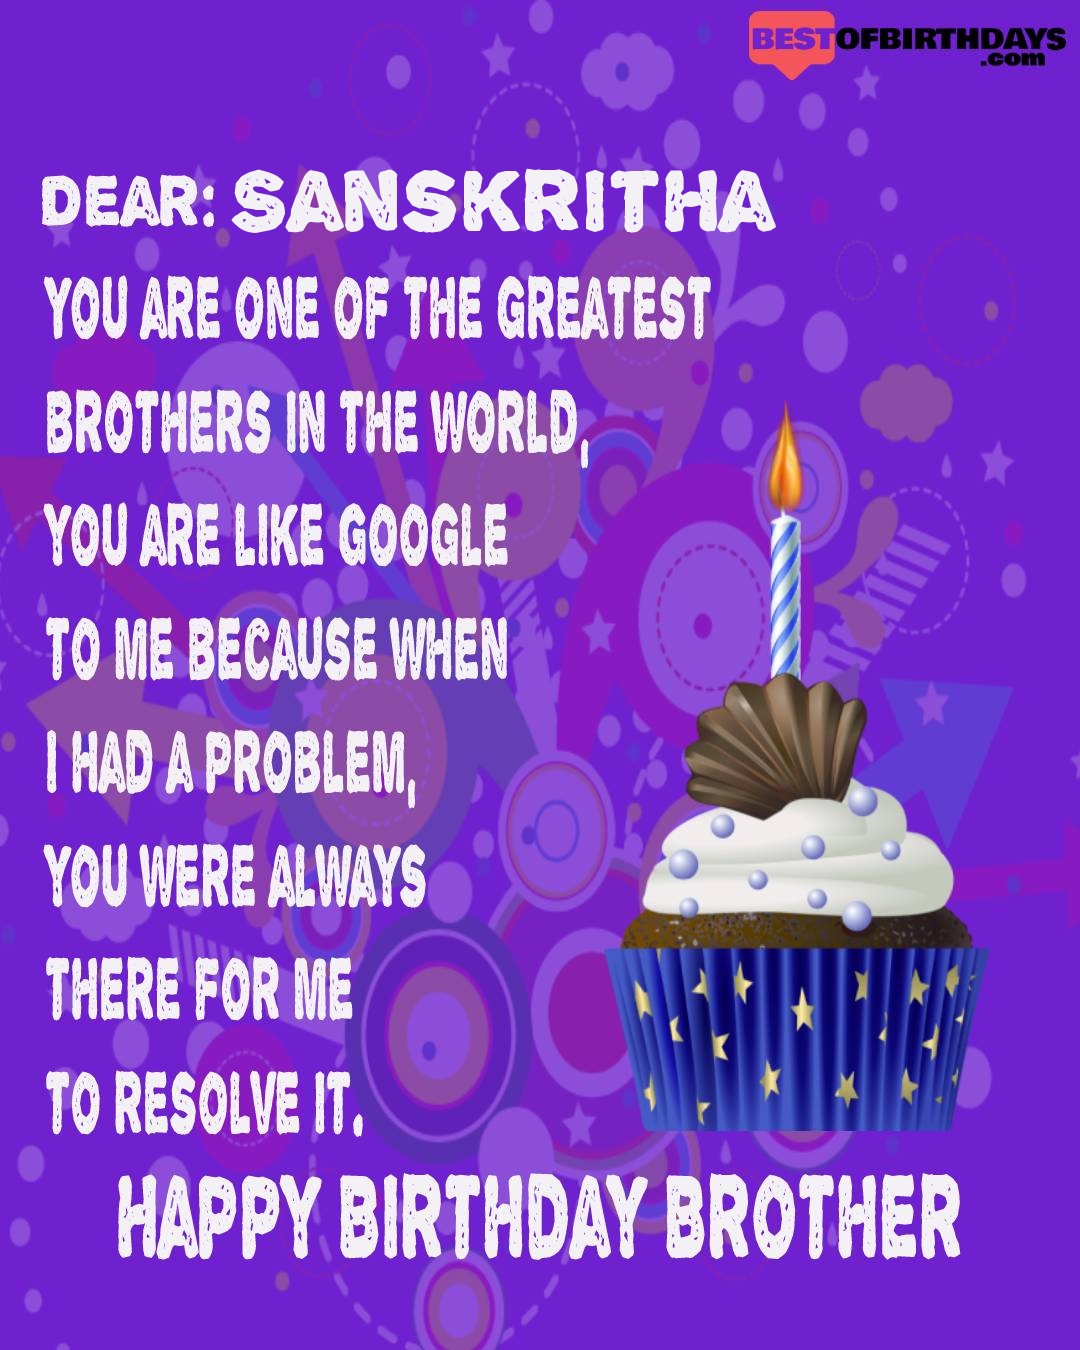 Happy birthday sanskritha bhai brother bro